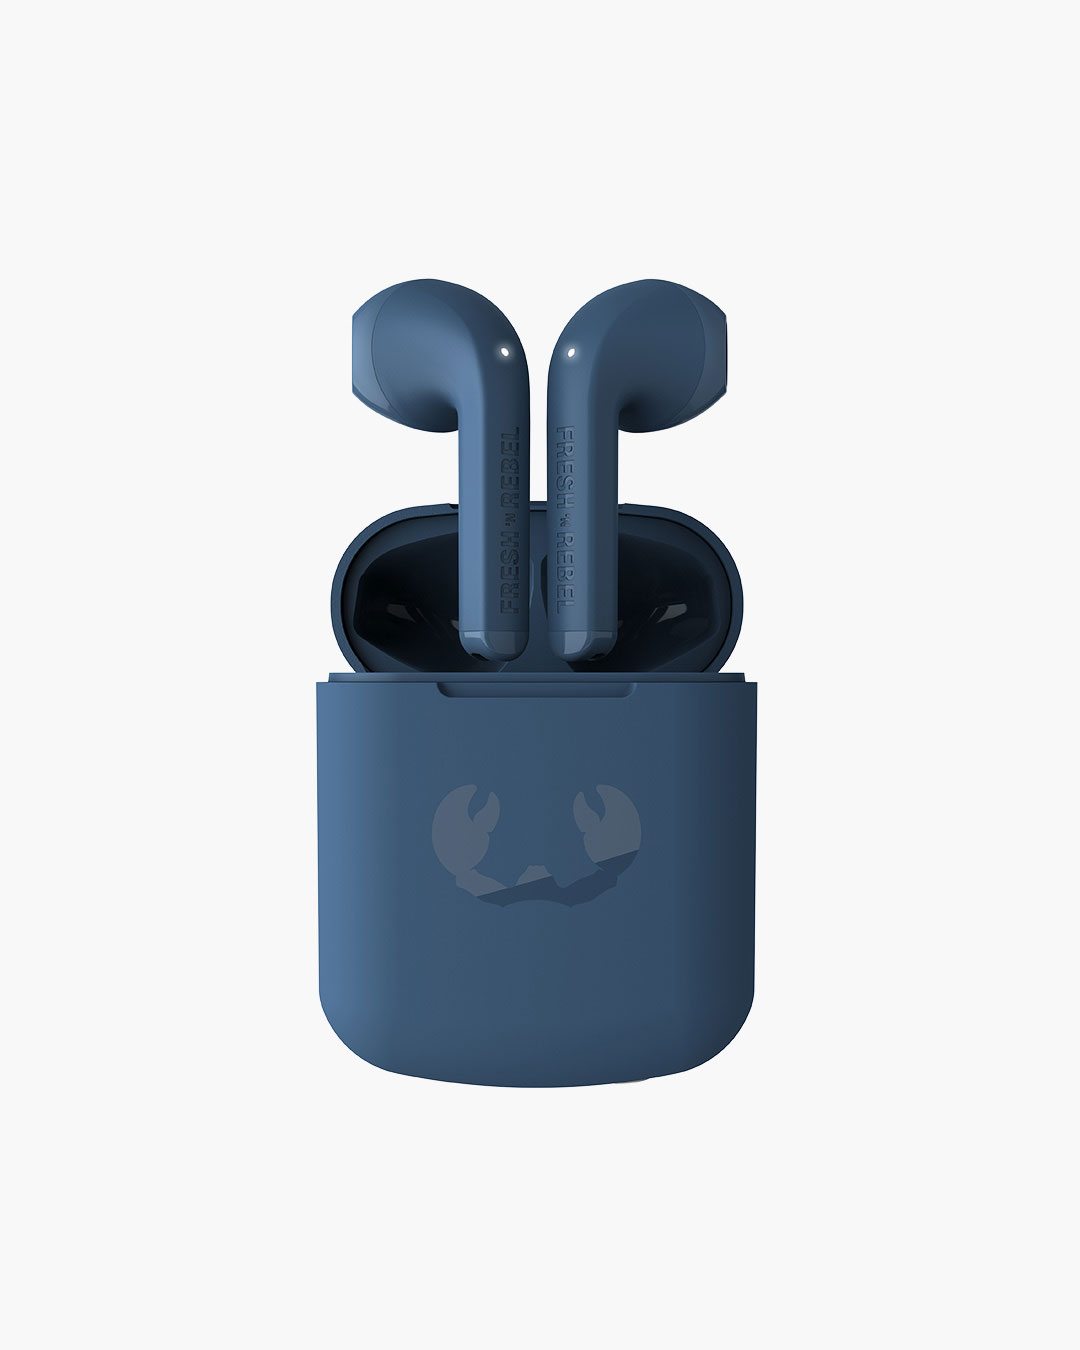 Fresh'n Rebel - Twins 1 - True Wireless In-ear headphones - Steel Blue - Artikelnummer: 8720249801016 von Fresh'n Rebel